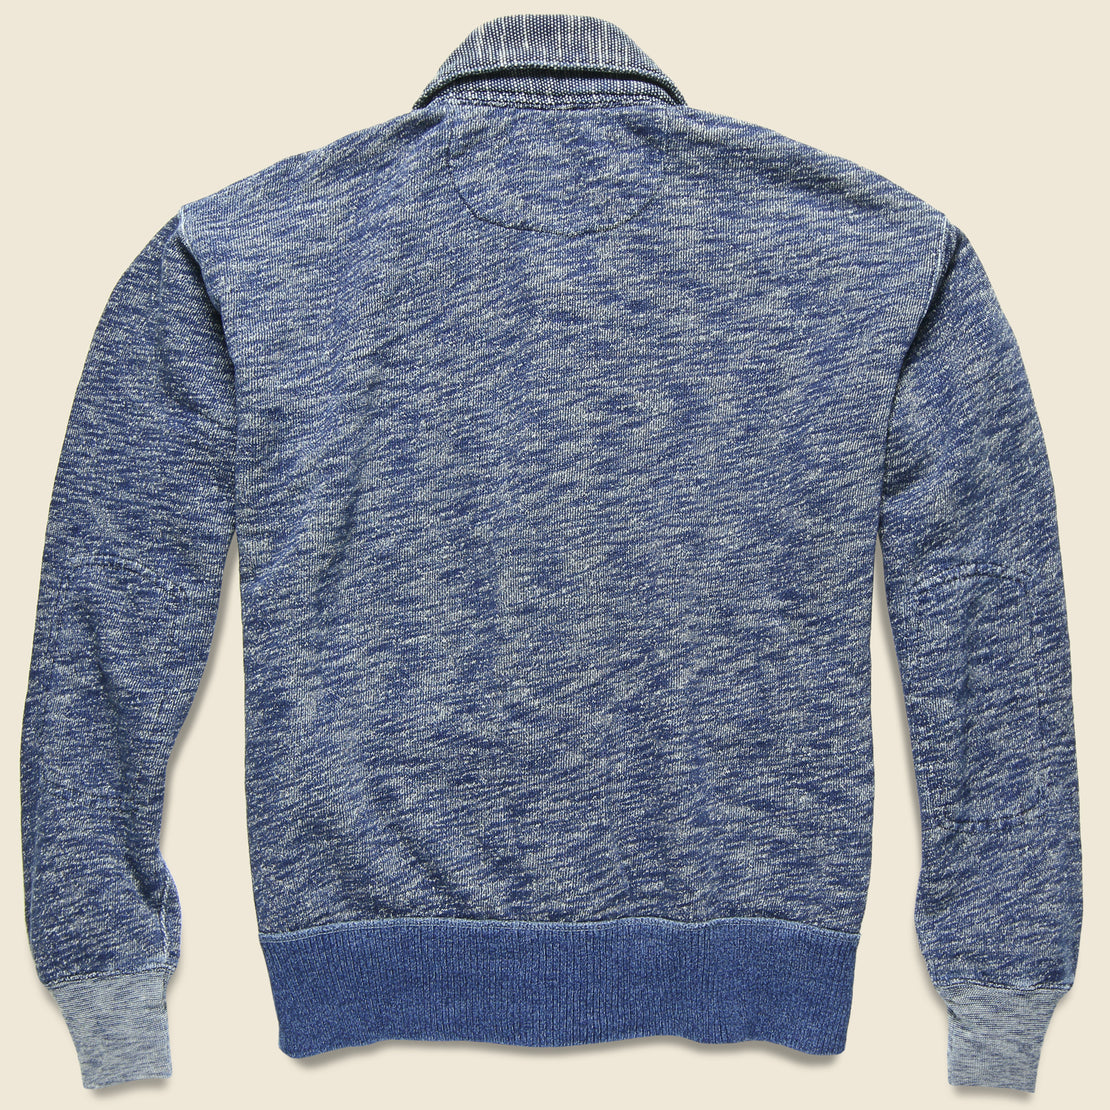 Vintage Fleece Coach Cardigan - Indigo Heather - RRL - STAG Provisions - Tops - Sweater